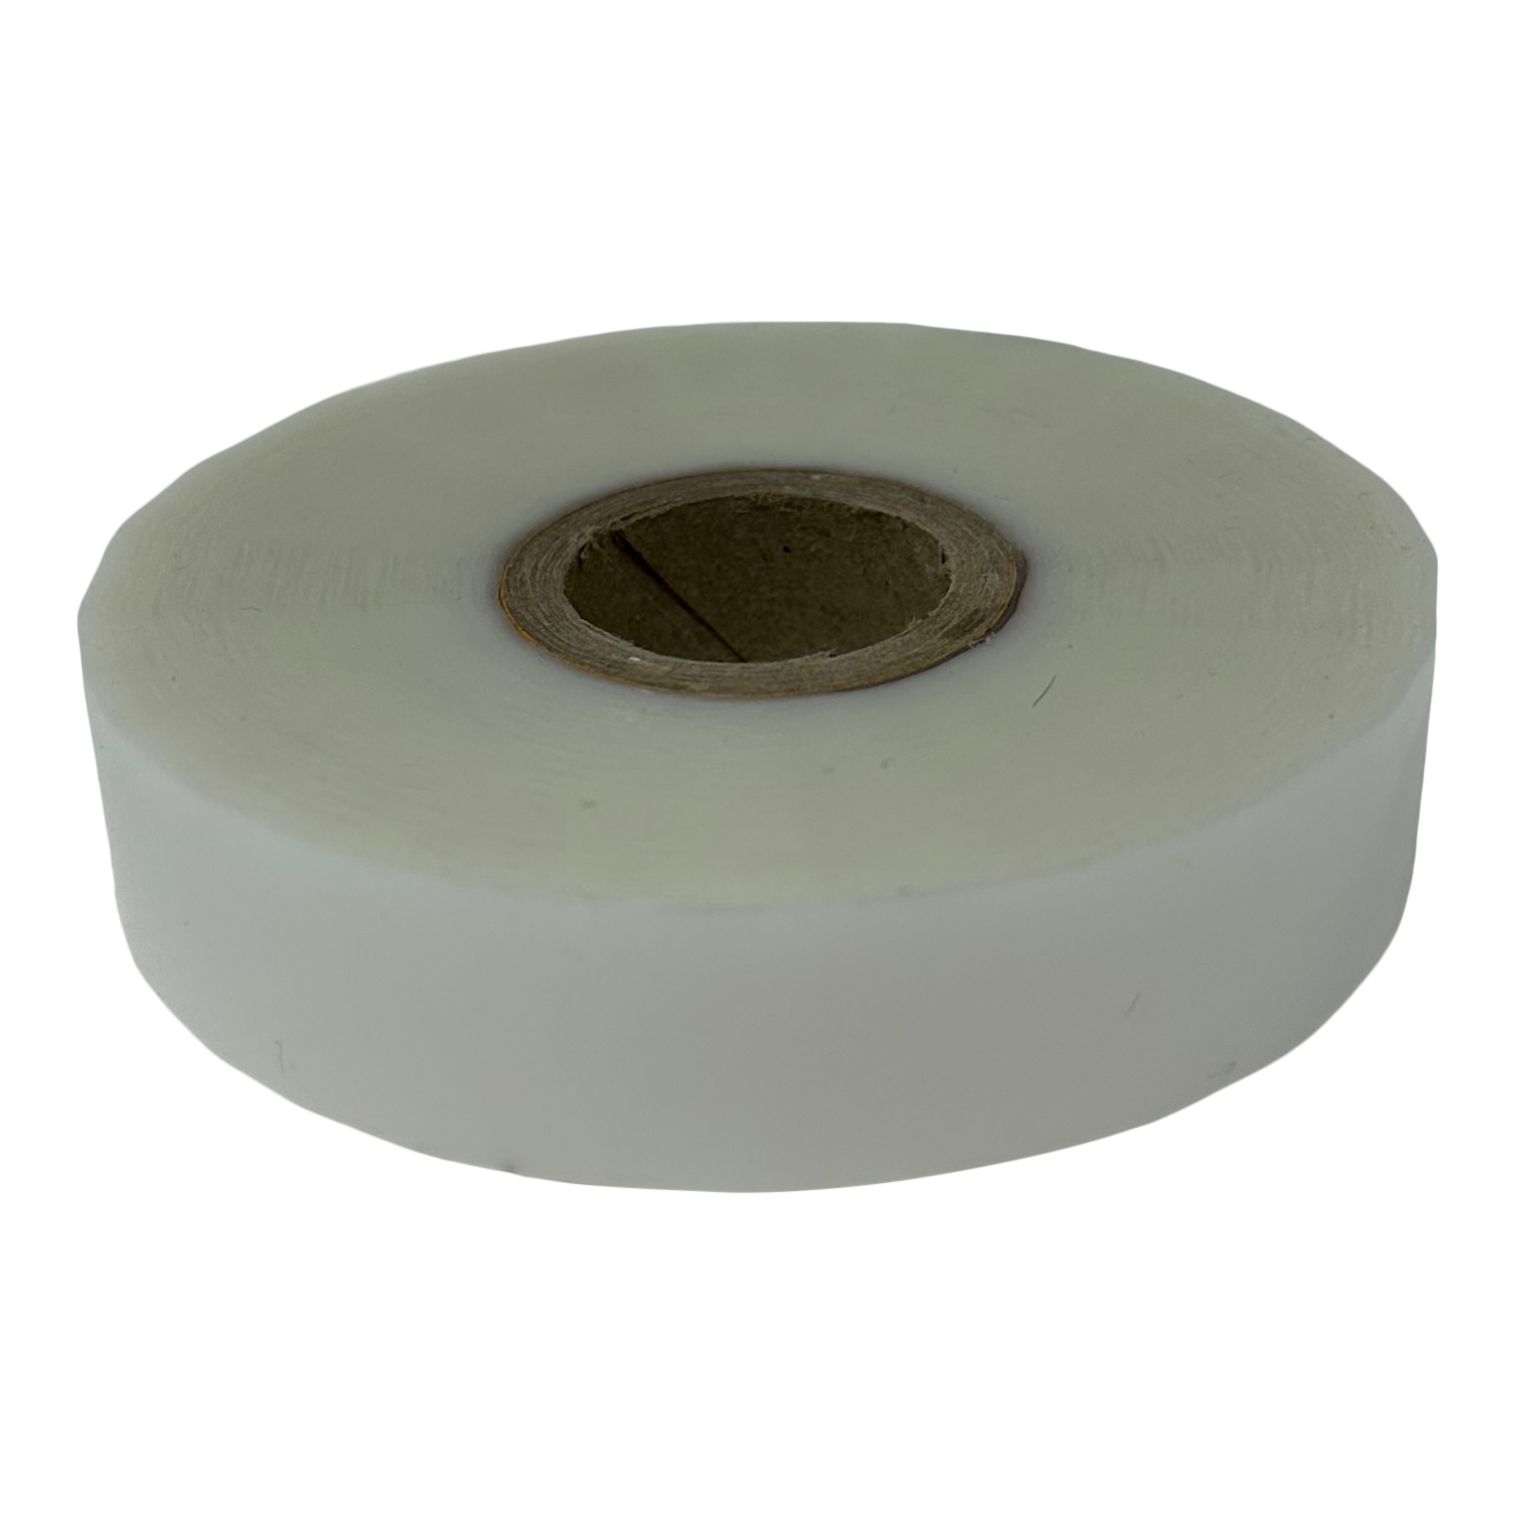 Chem-Set Stone Seam Tape - 1 x 200' Roll